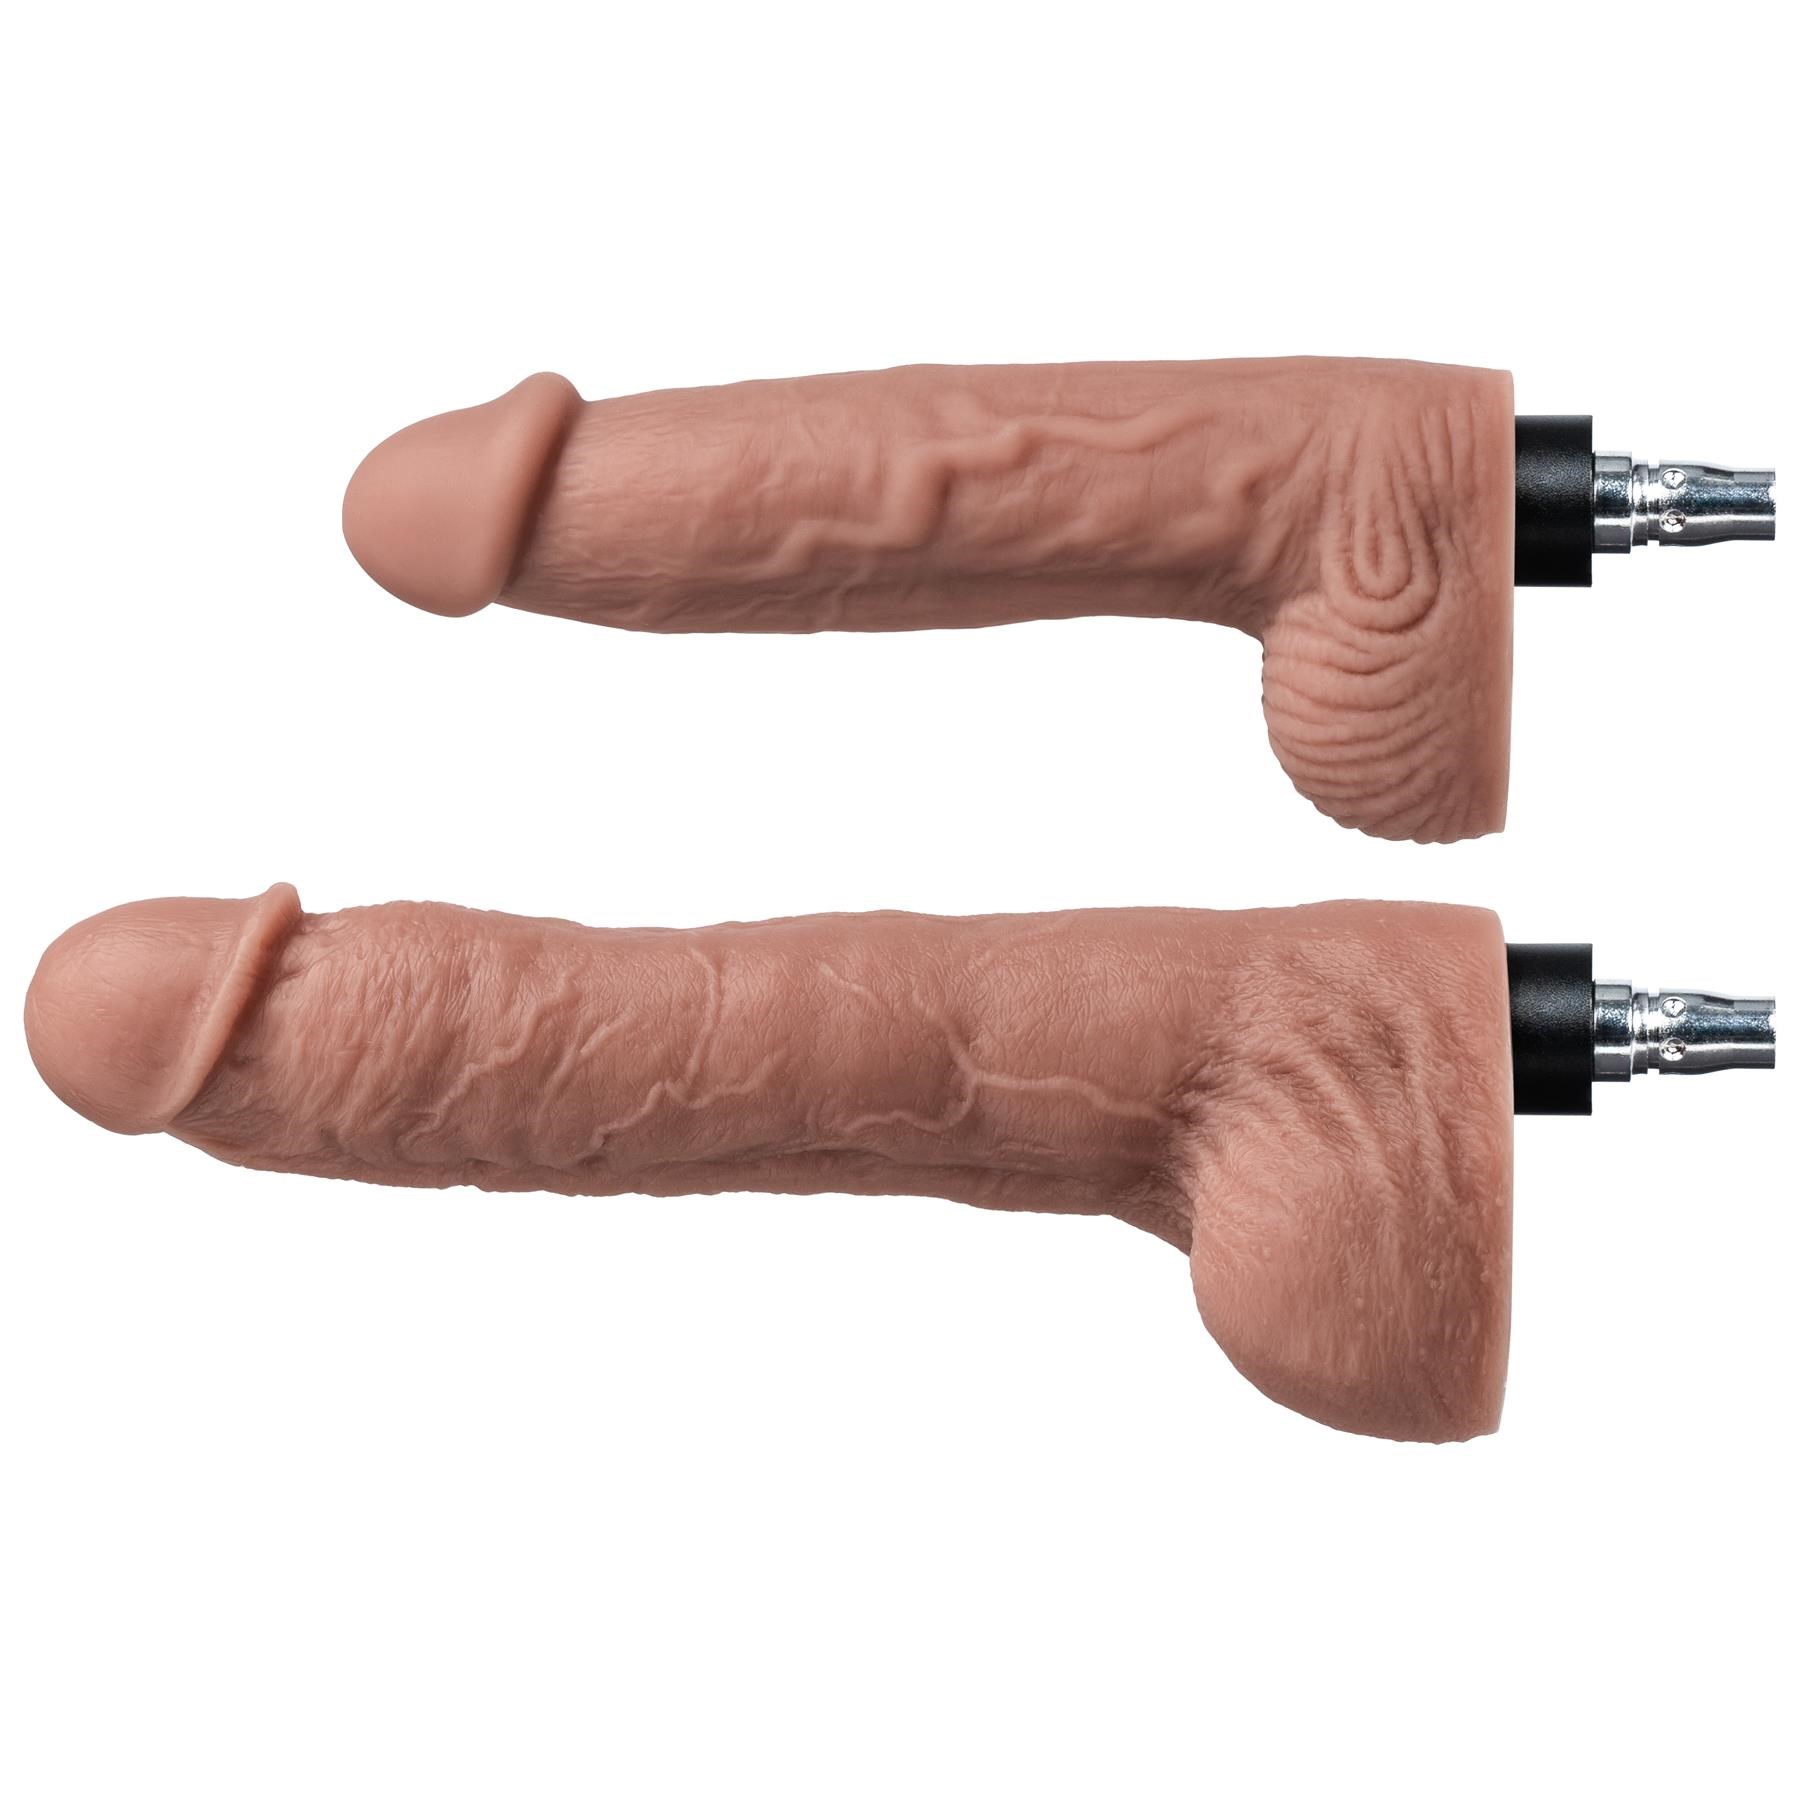 Lovense Bluetooth Sex Machine - Dildos